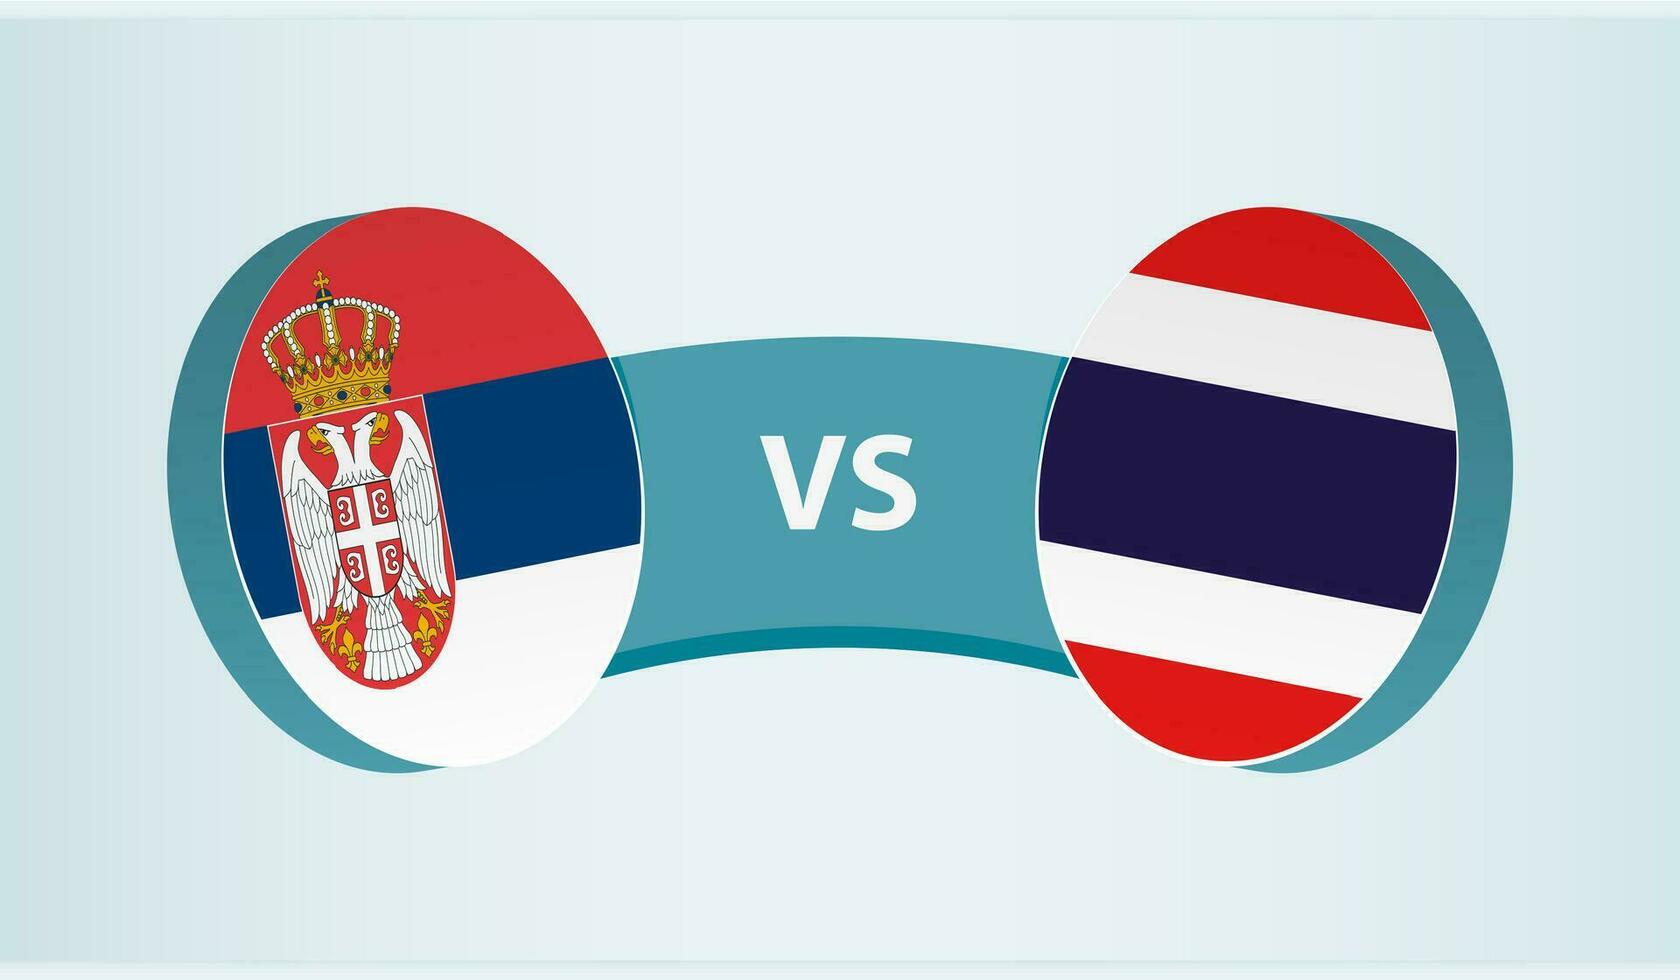 serbia mot thailand, team sporter konkurrens begrepp. vektor